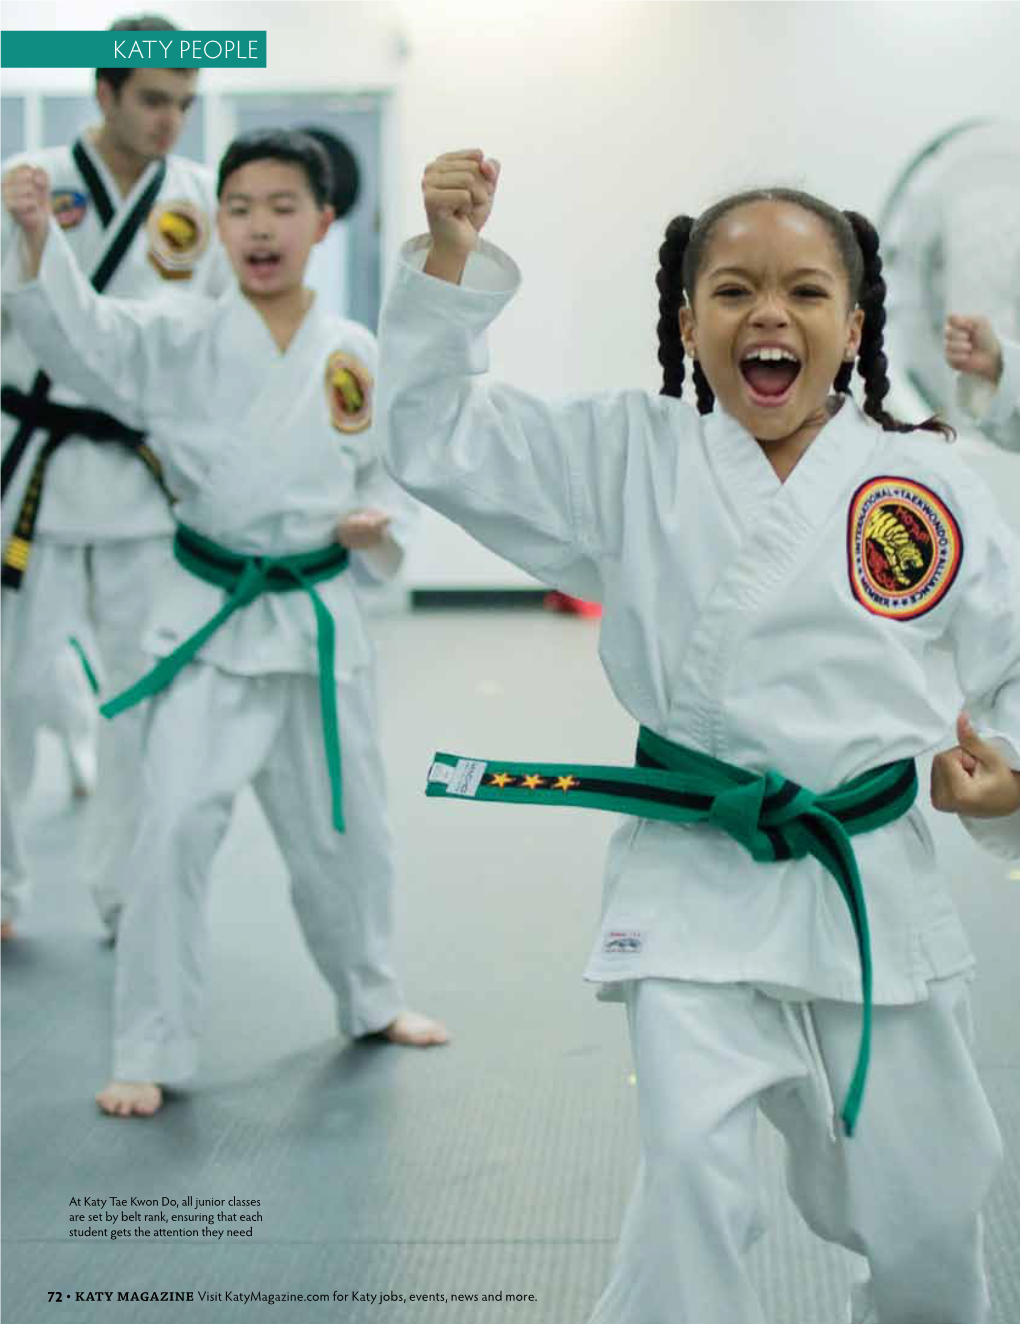 Katy Martial Arts Programs for Kids Katy Tae Kwon Do and Jiu-Jitsu Academy 625 S